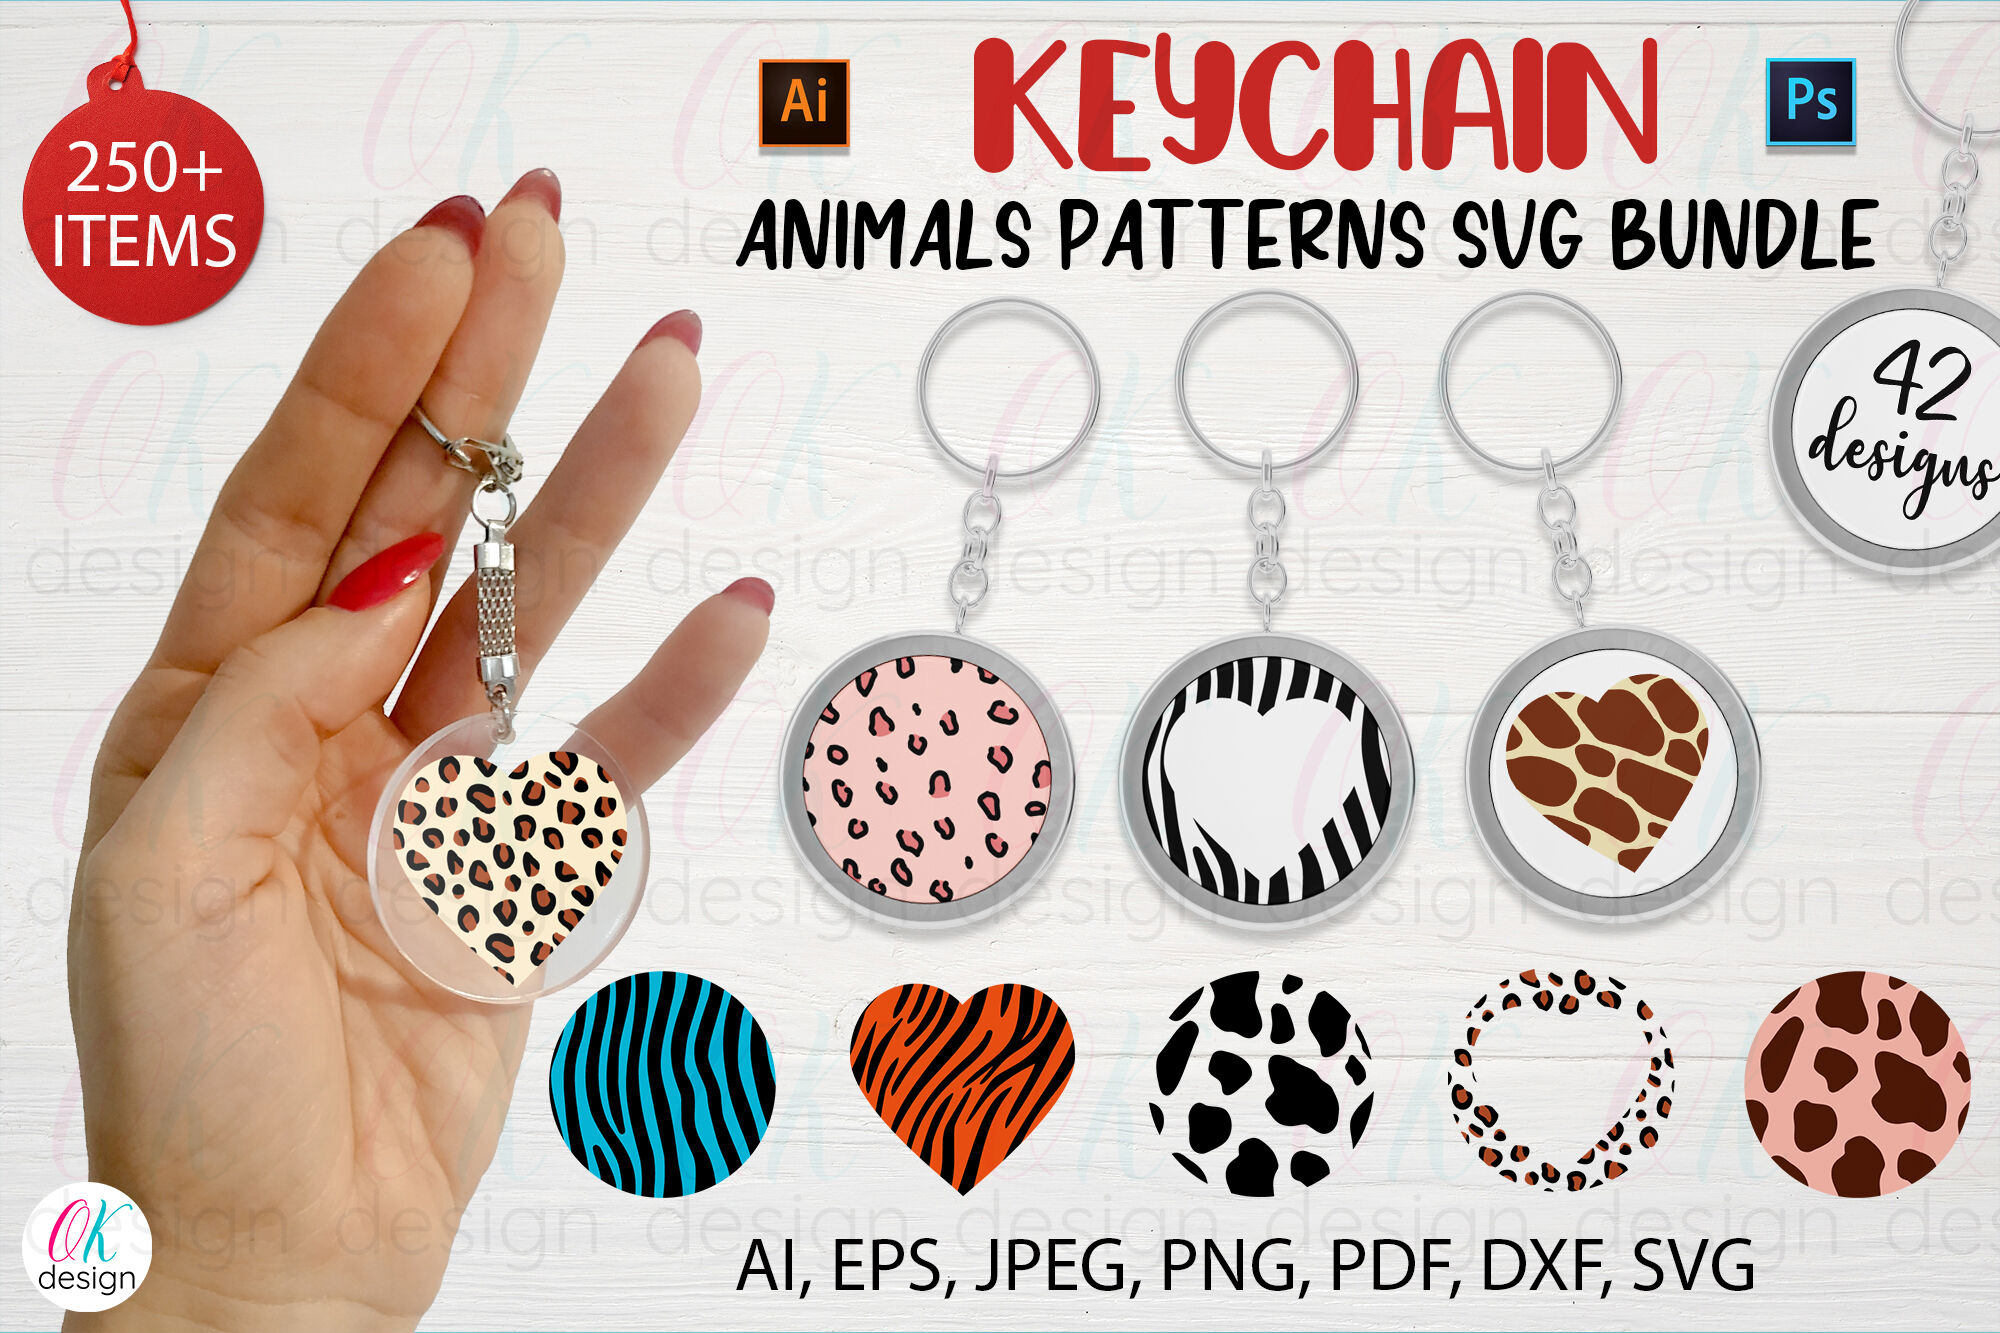 Download Keychain Svg Bundle Keychain Animals Patterns Bundle By Ok Design Thehungryjpeg Com